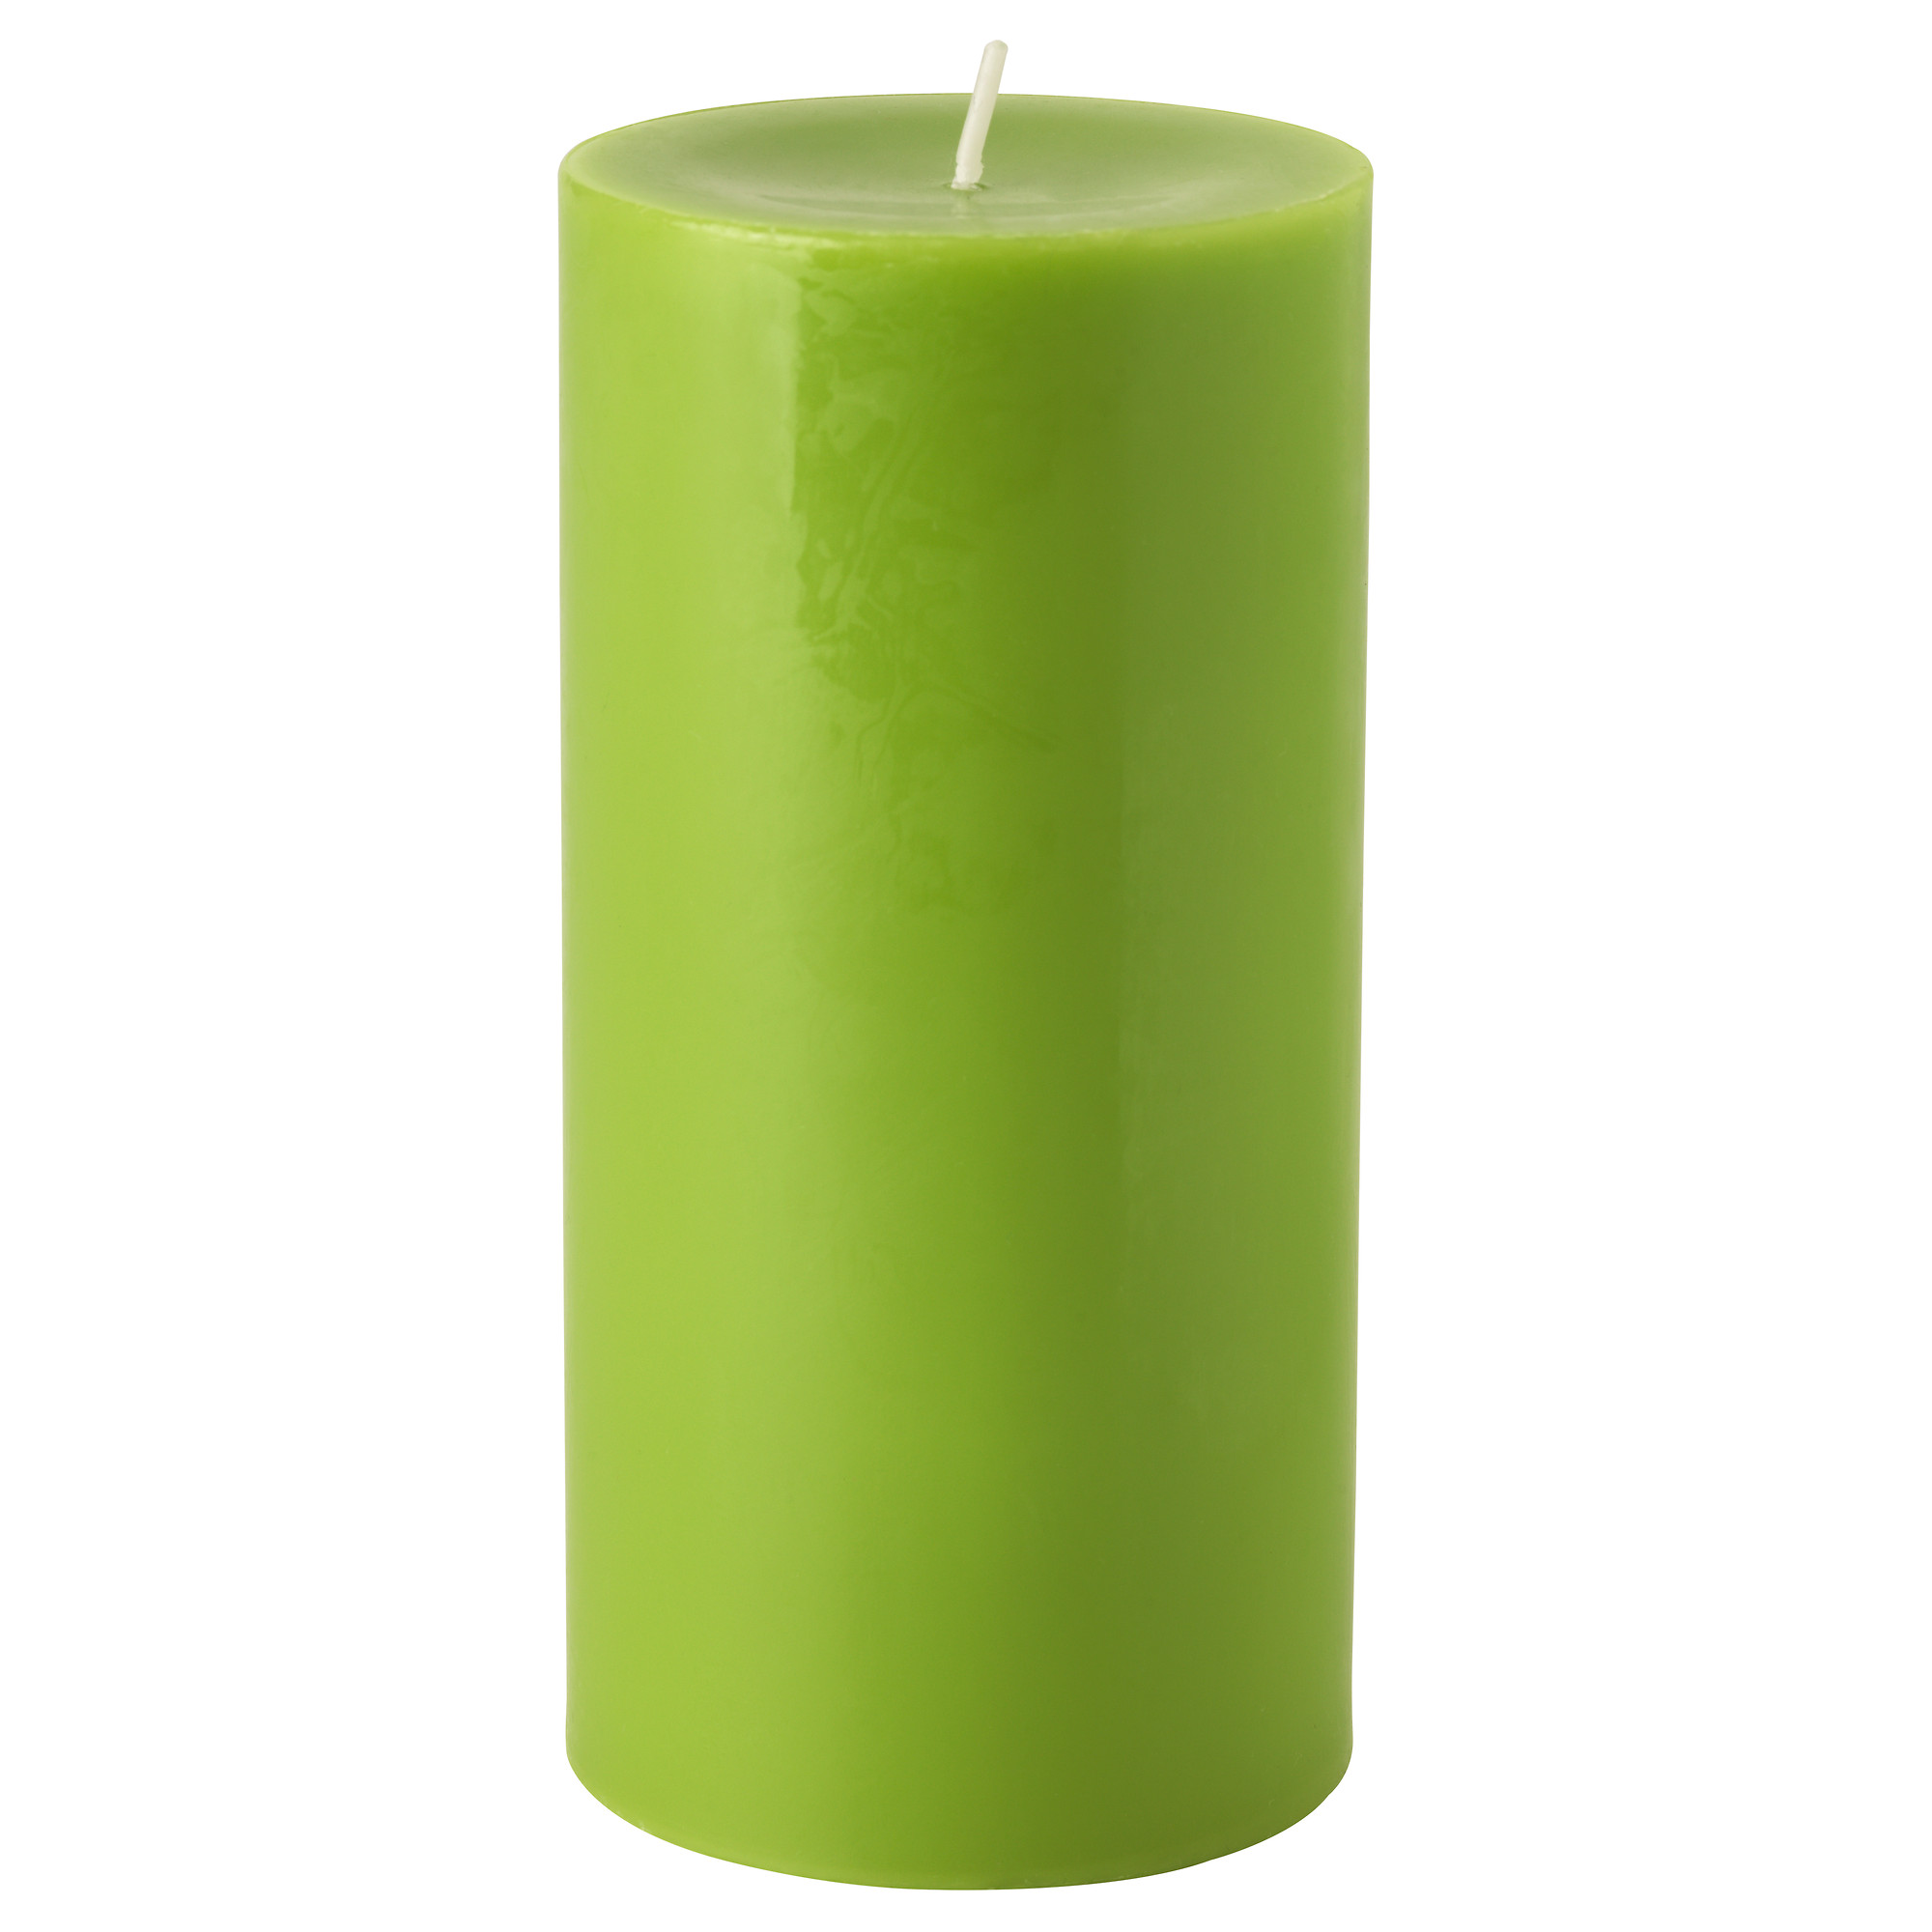 Свечи зеленого цвета. Формовые ароматические свечи икеа. СИНЛИГ свеча икеа. Икеа зеленые свечи. Ikea свеча салатовая.